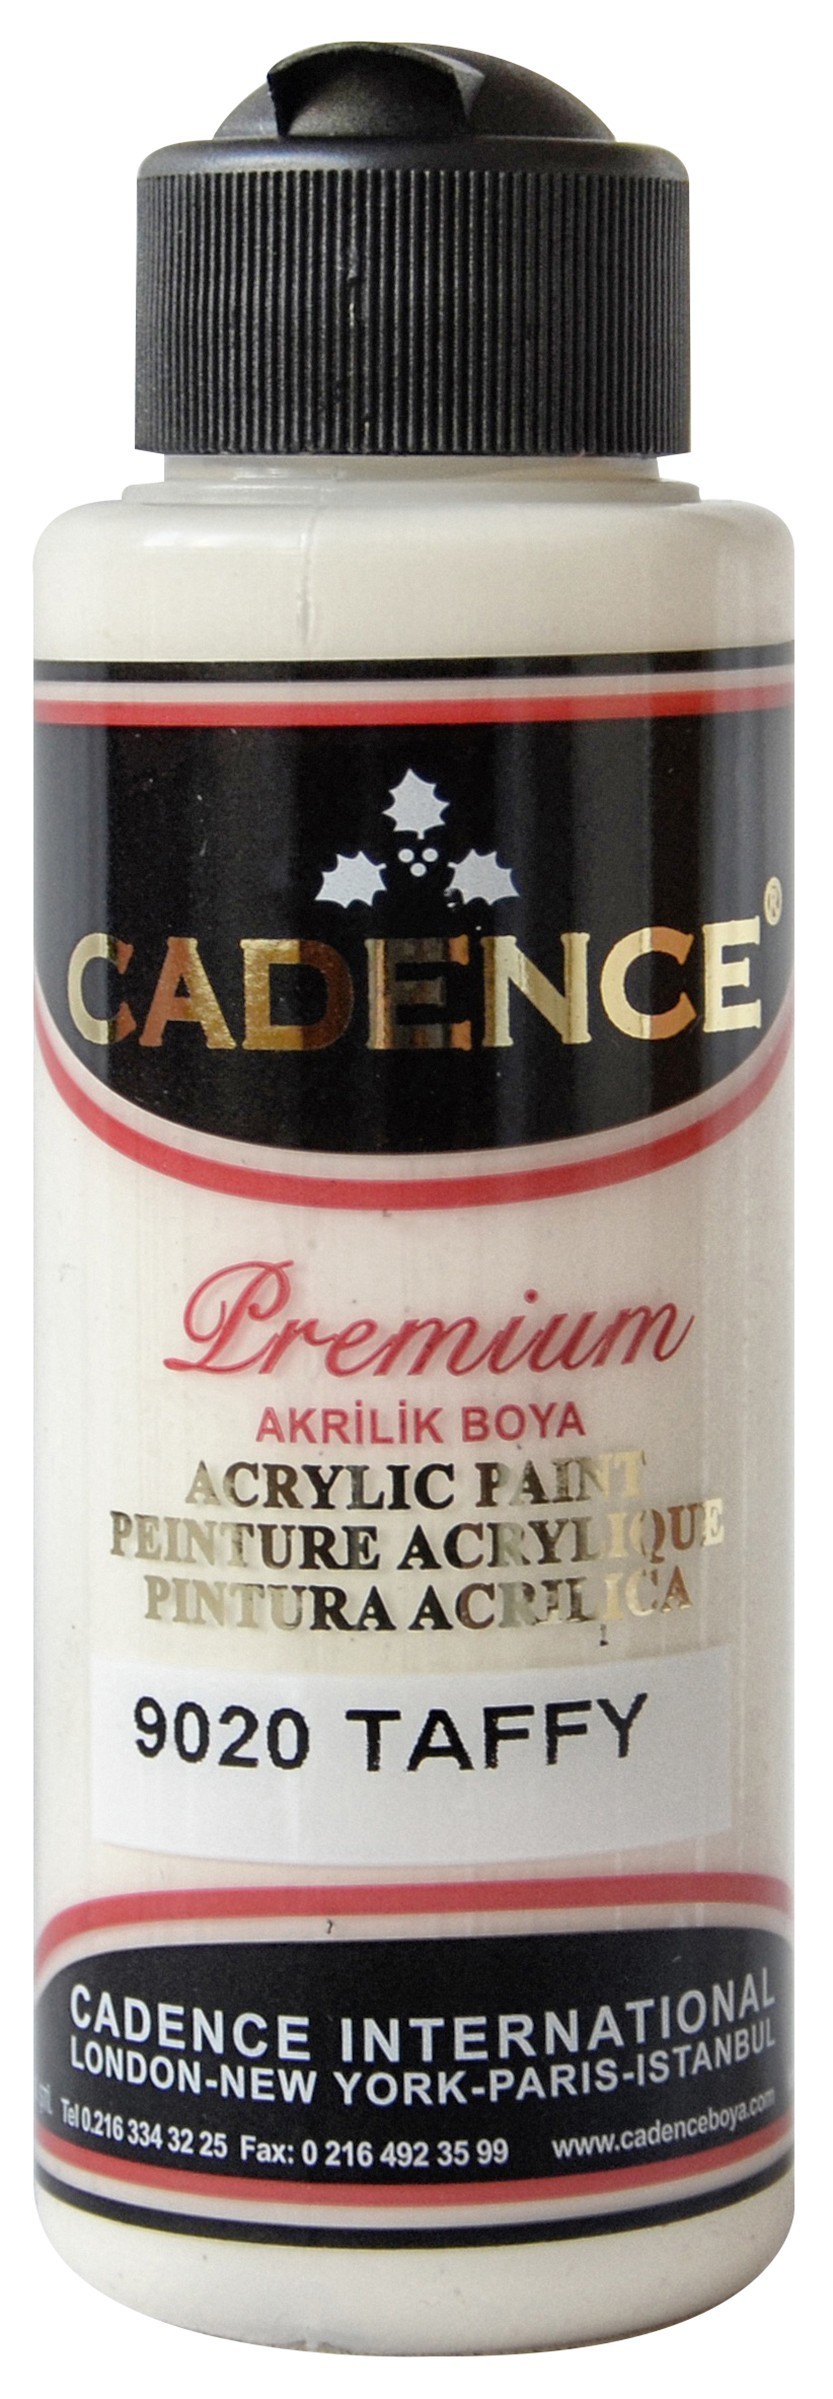 Cadence Akrilik Boya 120ML(cc) 9020 Taffy fiyatları